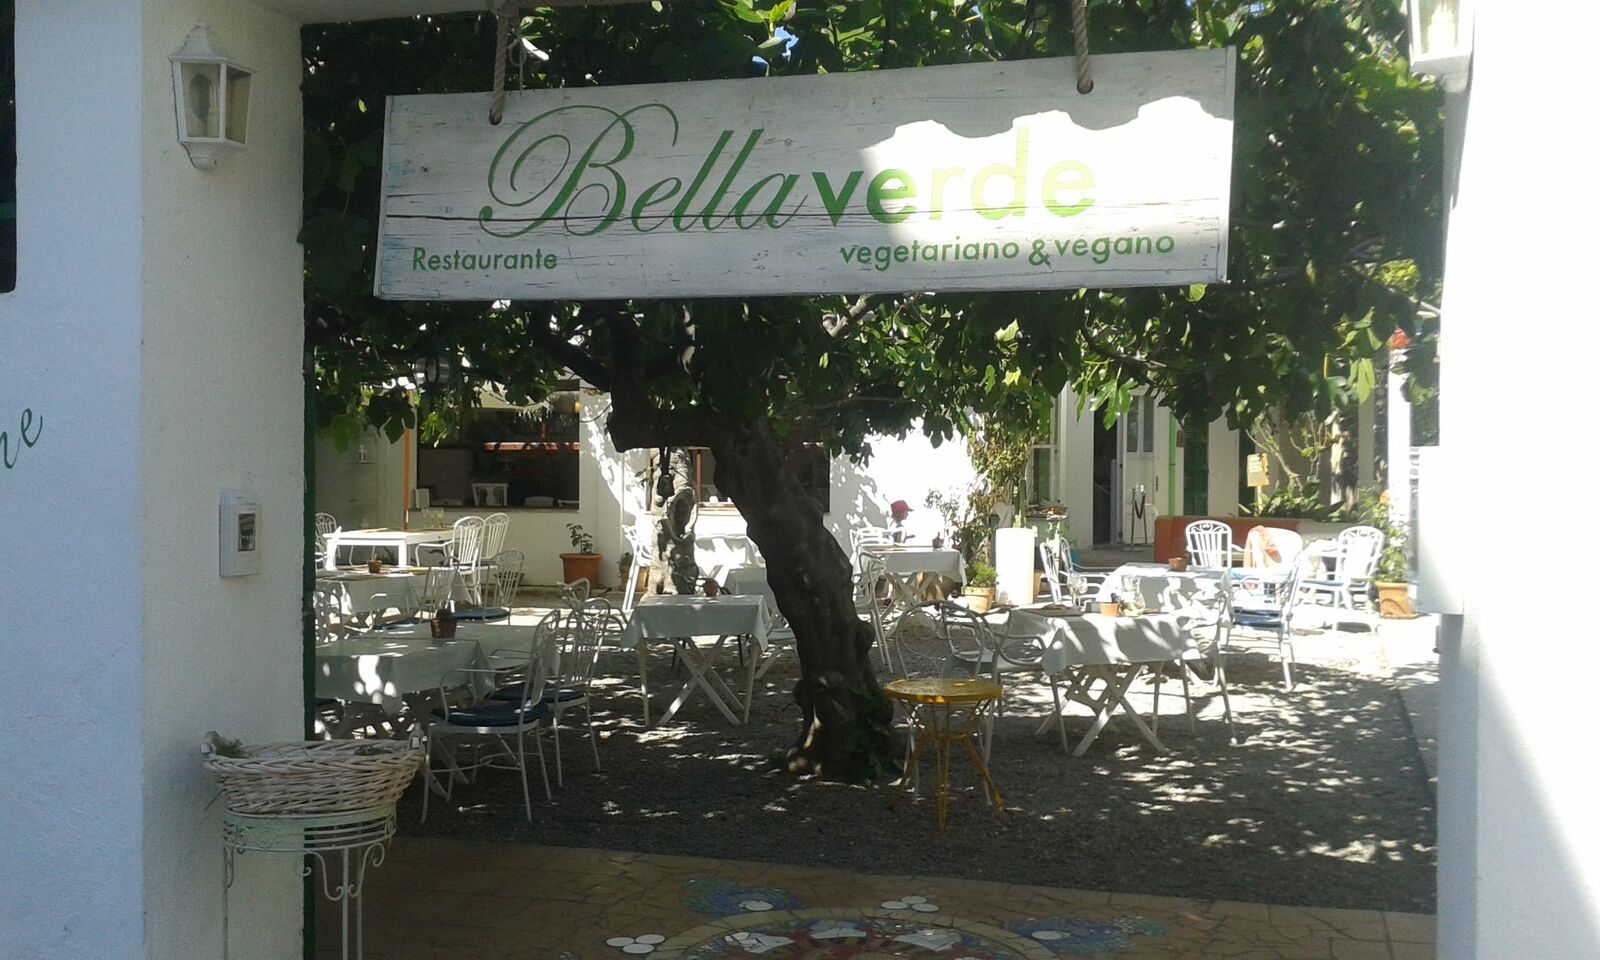 A photo of Bellavista